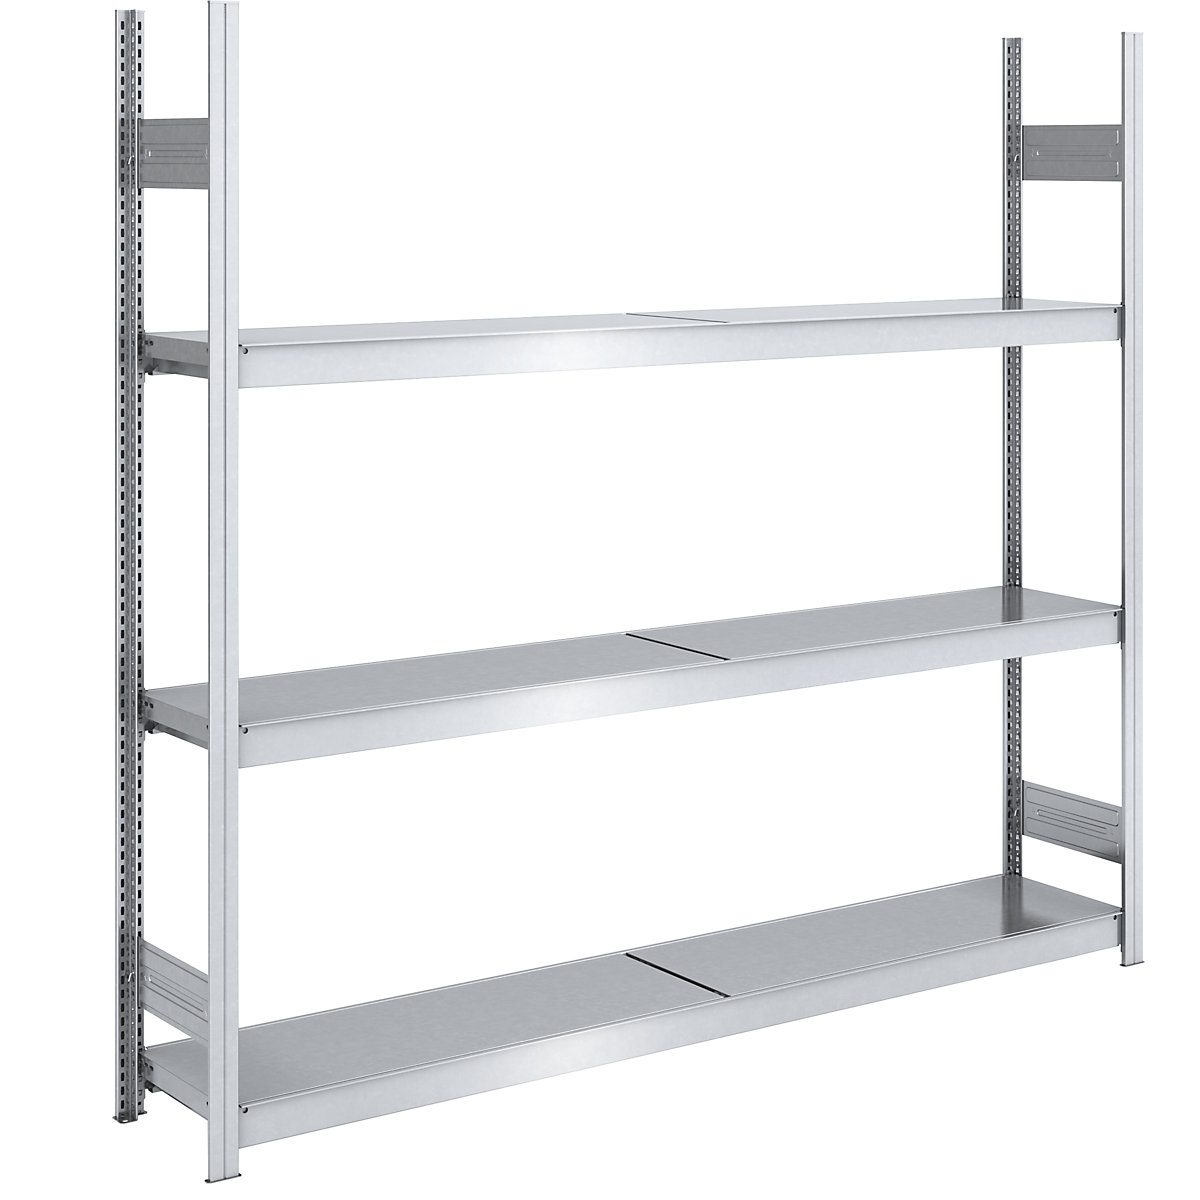 Wide span boltless shelving unit, zinc plated – hofe, shelf WxD 2000 x 400 mm, standard shelf unit, 3 steel shelves, height 2000 mm